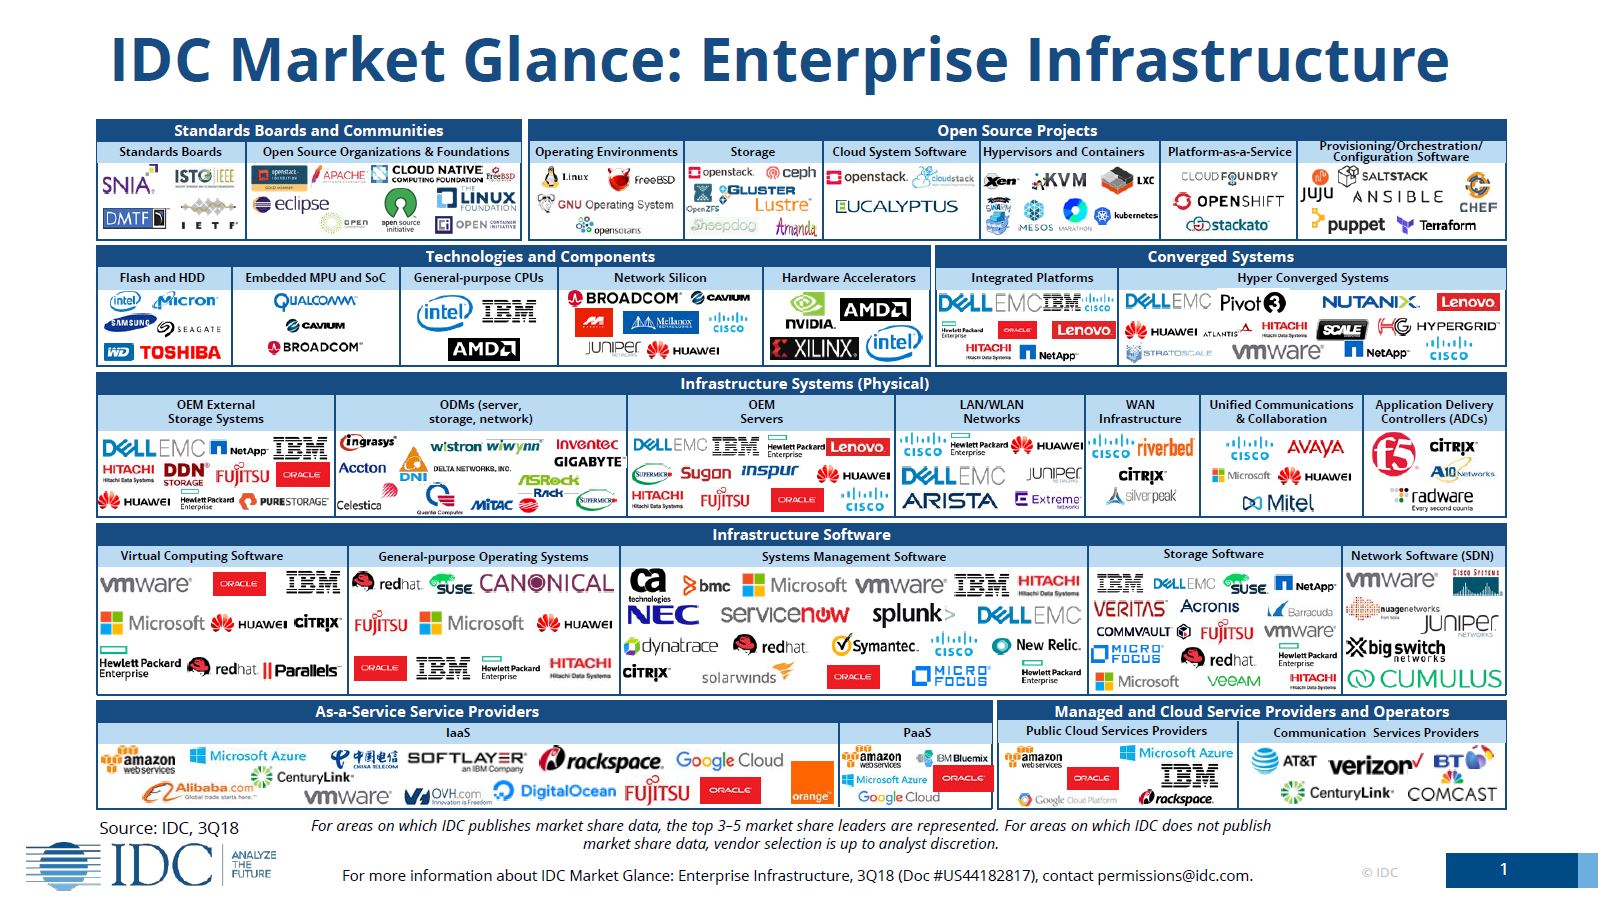 Enterprise Infrastructure Market Glance